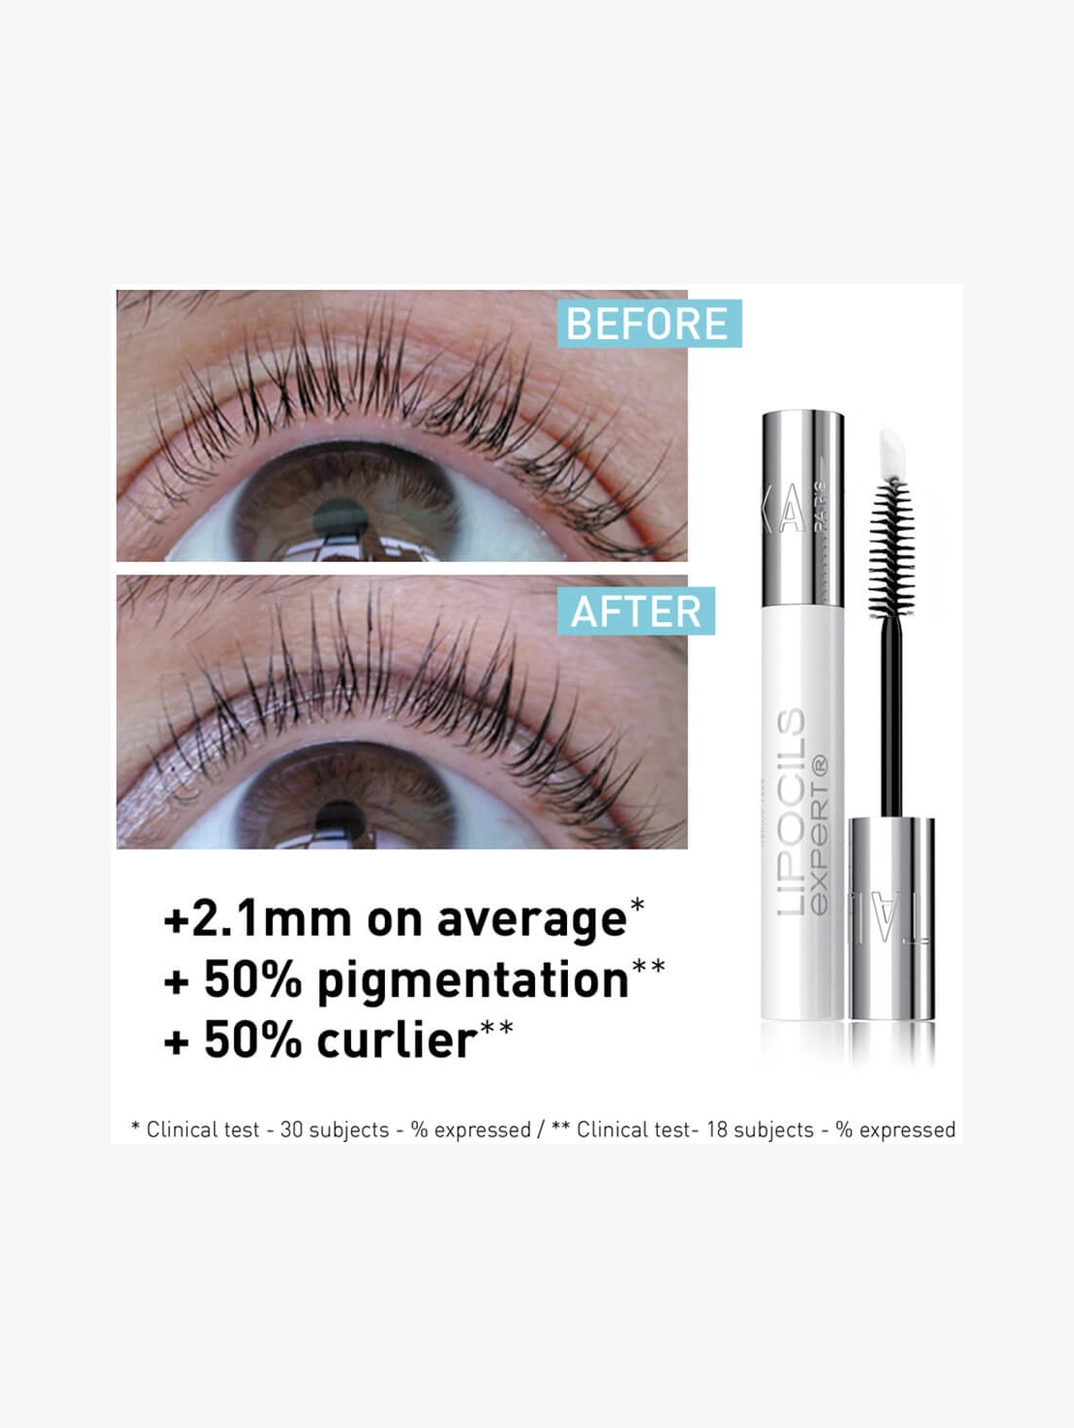 Talika Lipocils Expert Eyelash Enhancement and Pigmentation Serum –